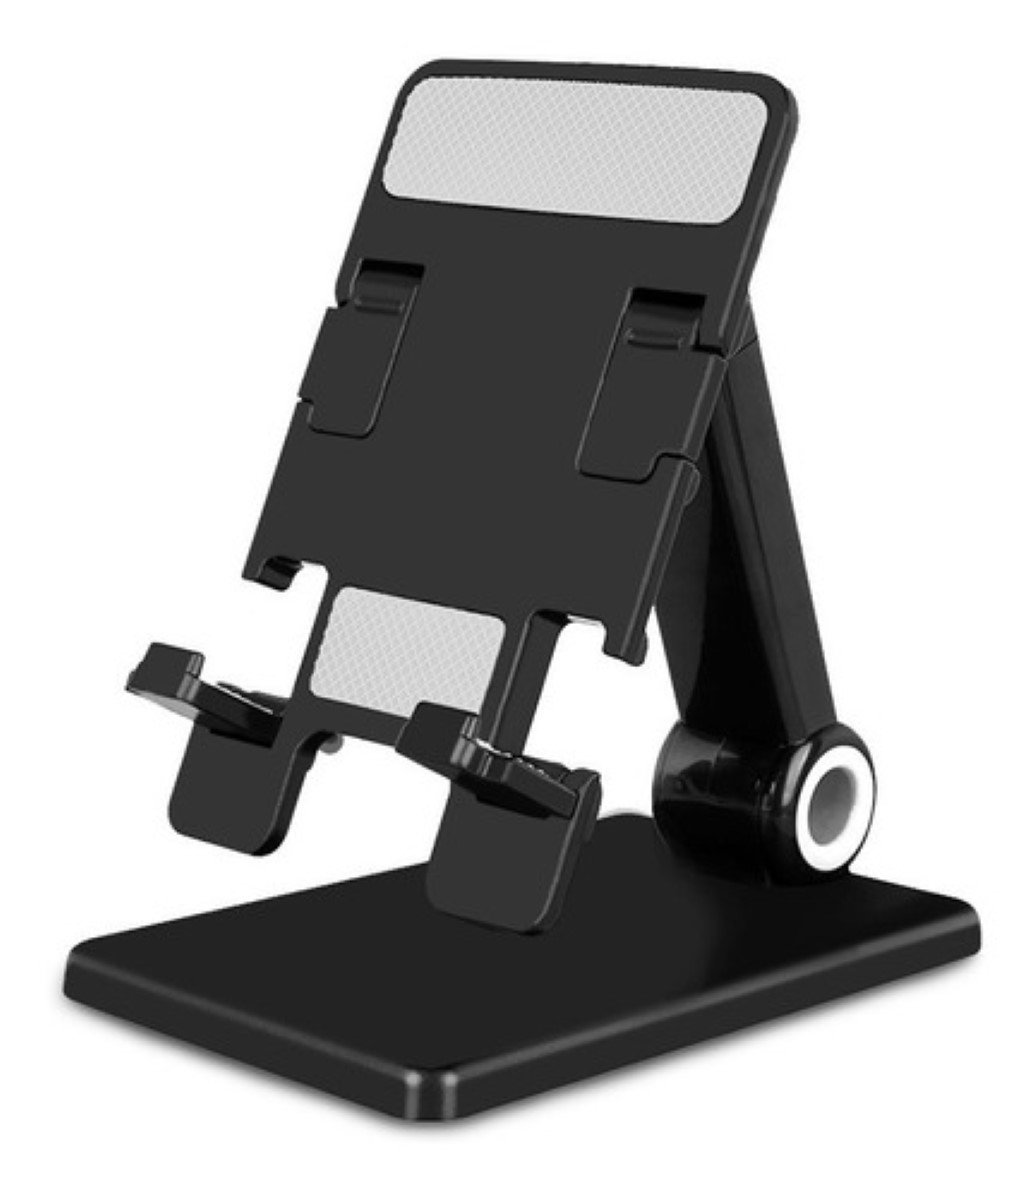 Soporte para celular escritorio mesa plegable ajustable